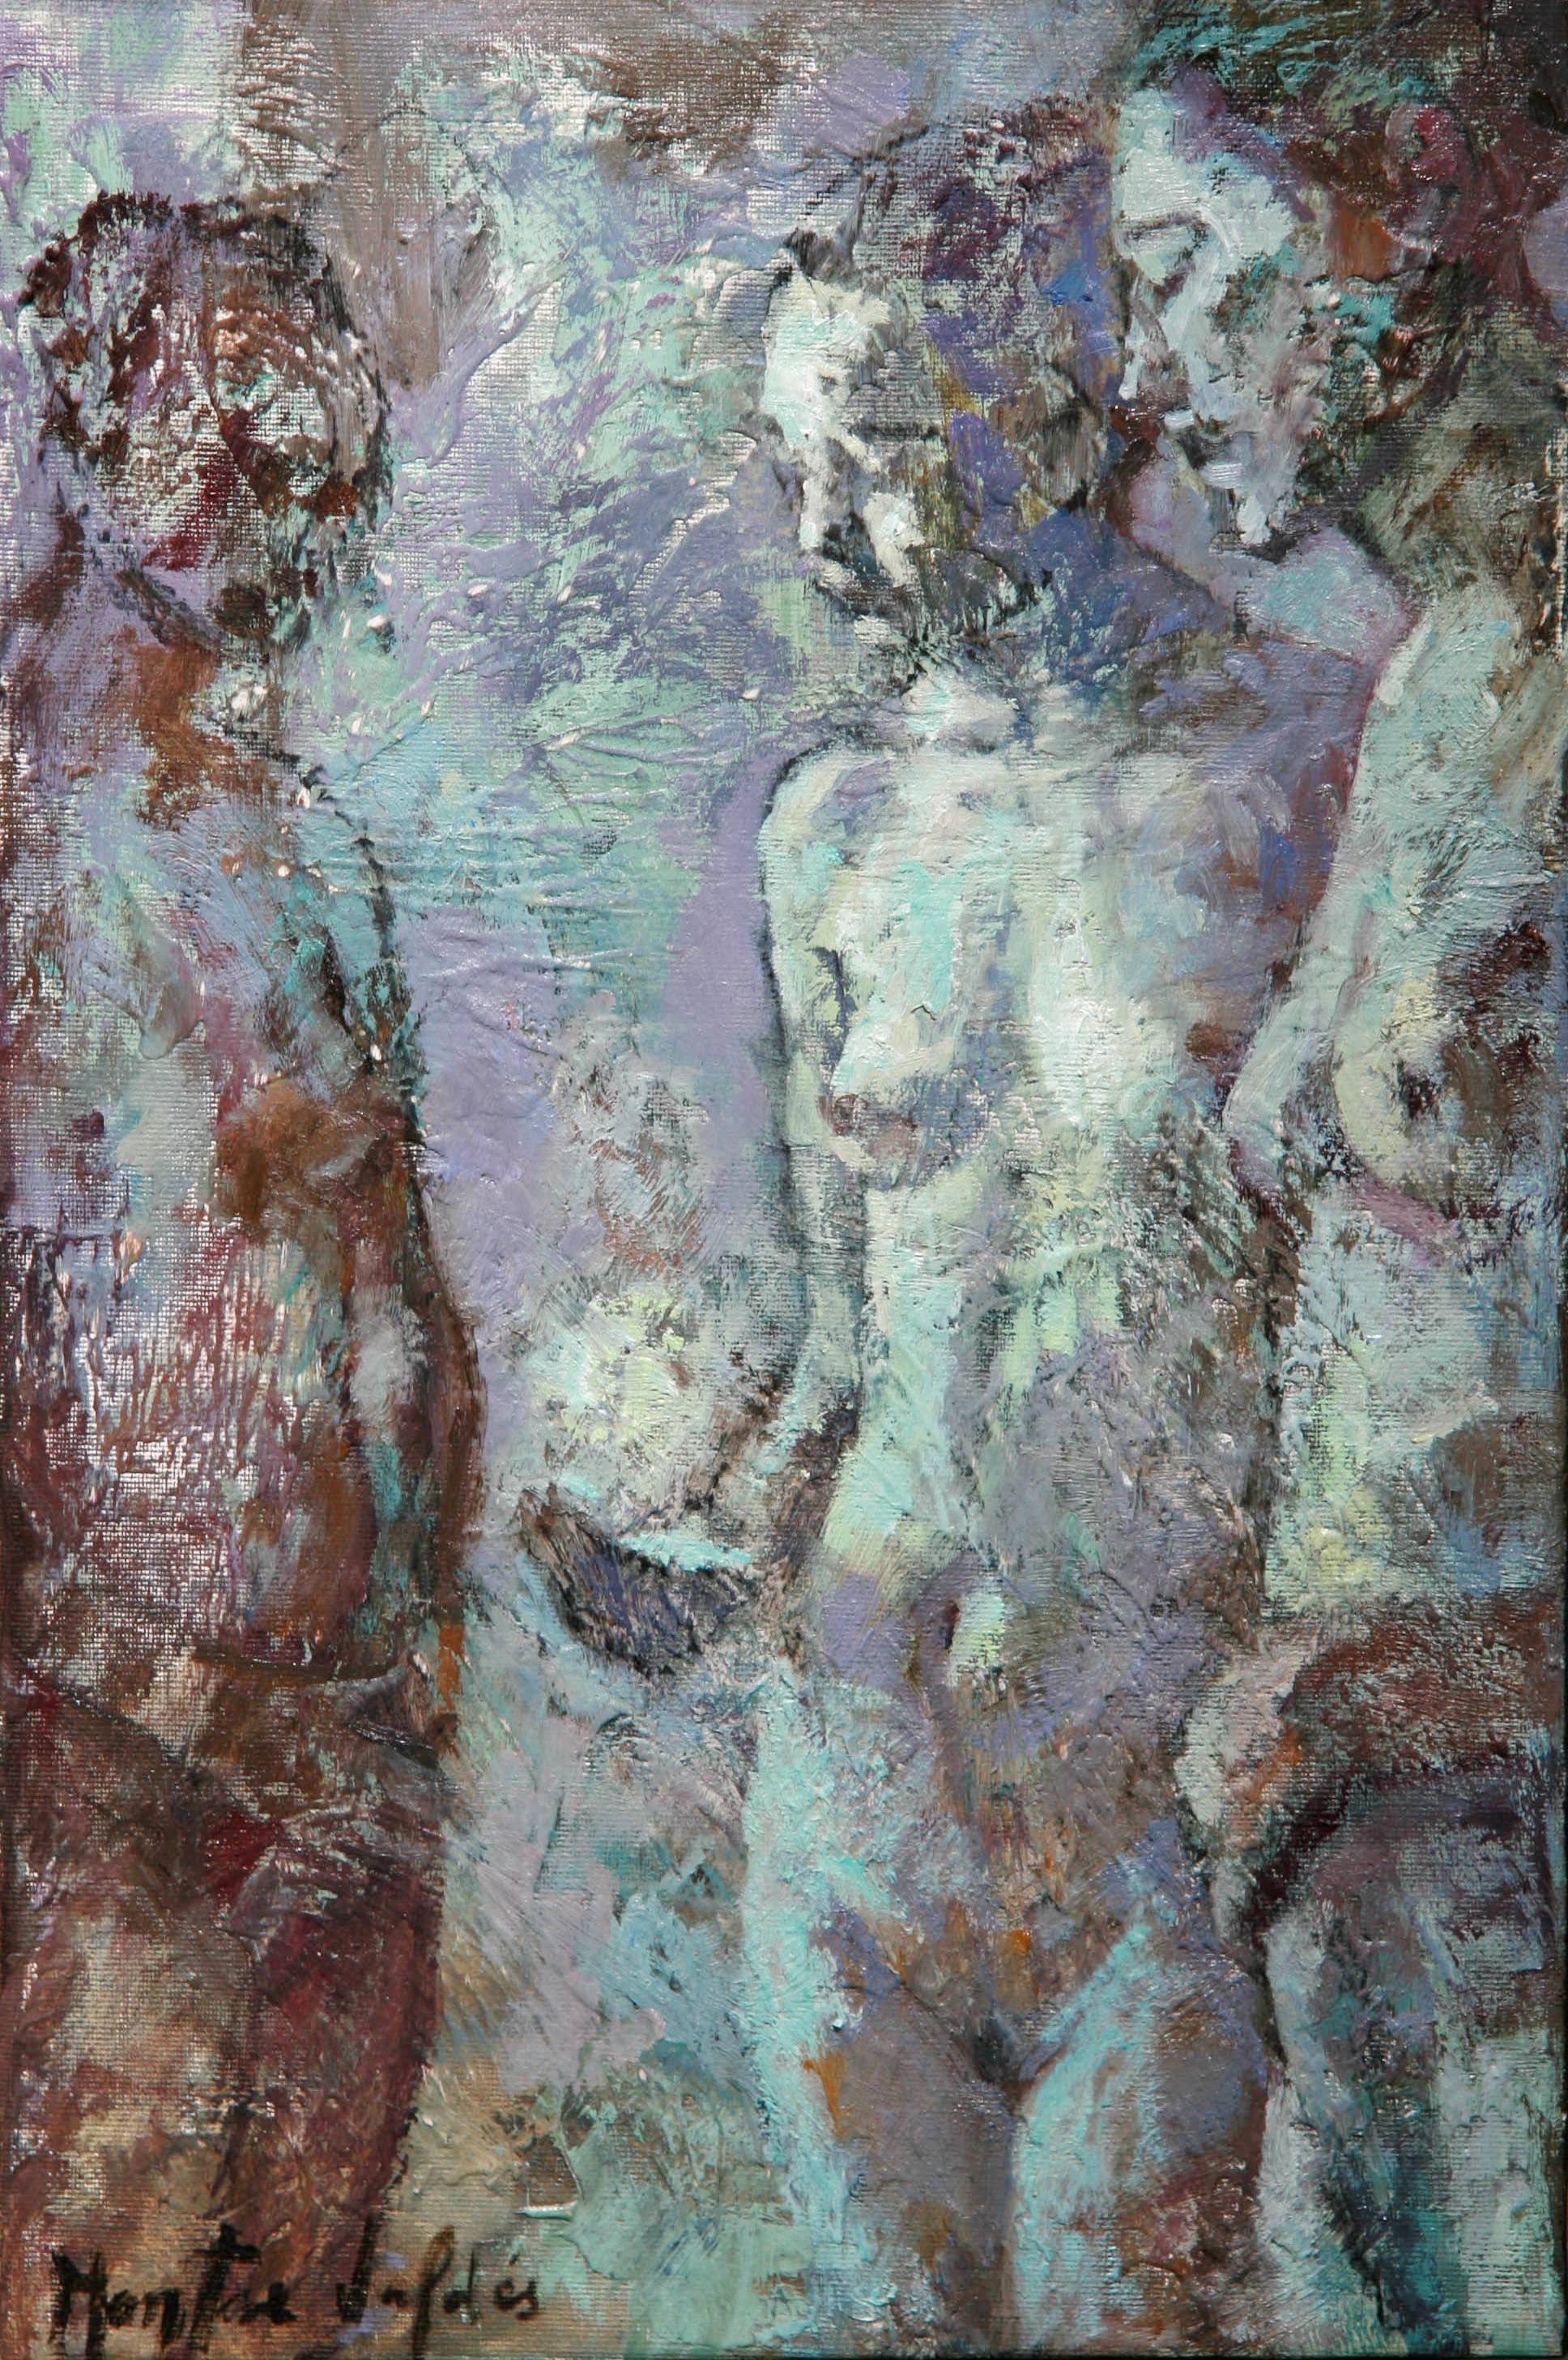 Montse Valdés Portrait Painting - 7-9-08 - 21st Century, Contemporary, Nude Painting, Oil on Canvas